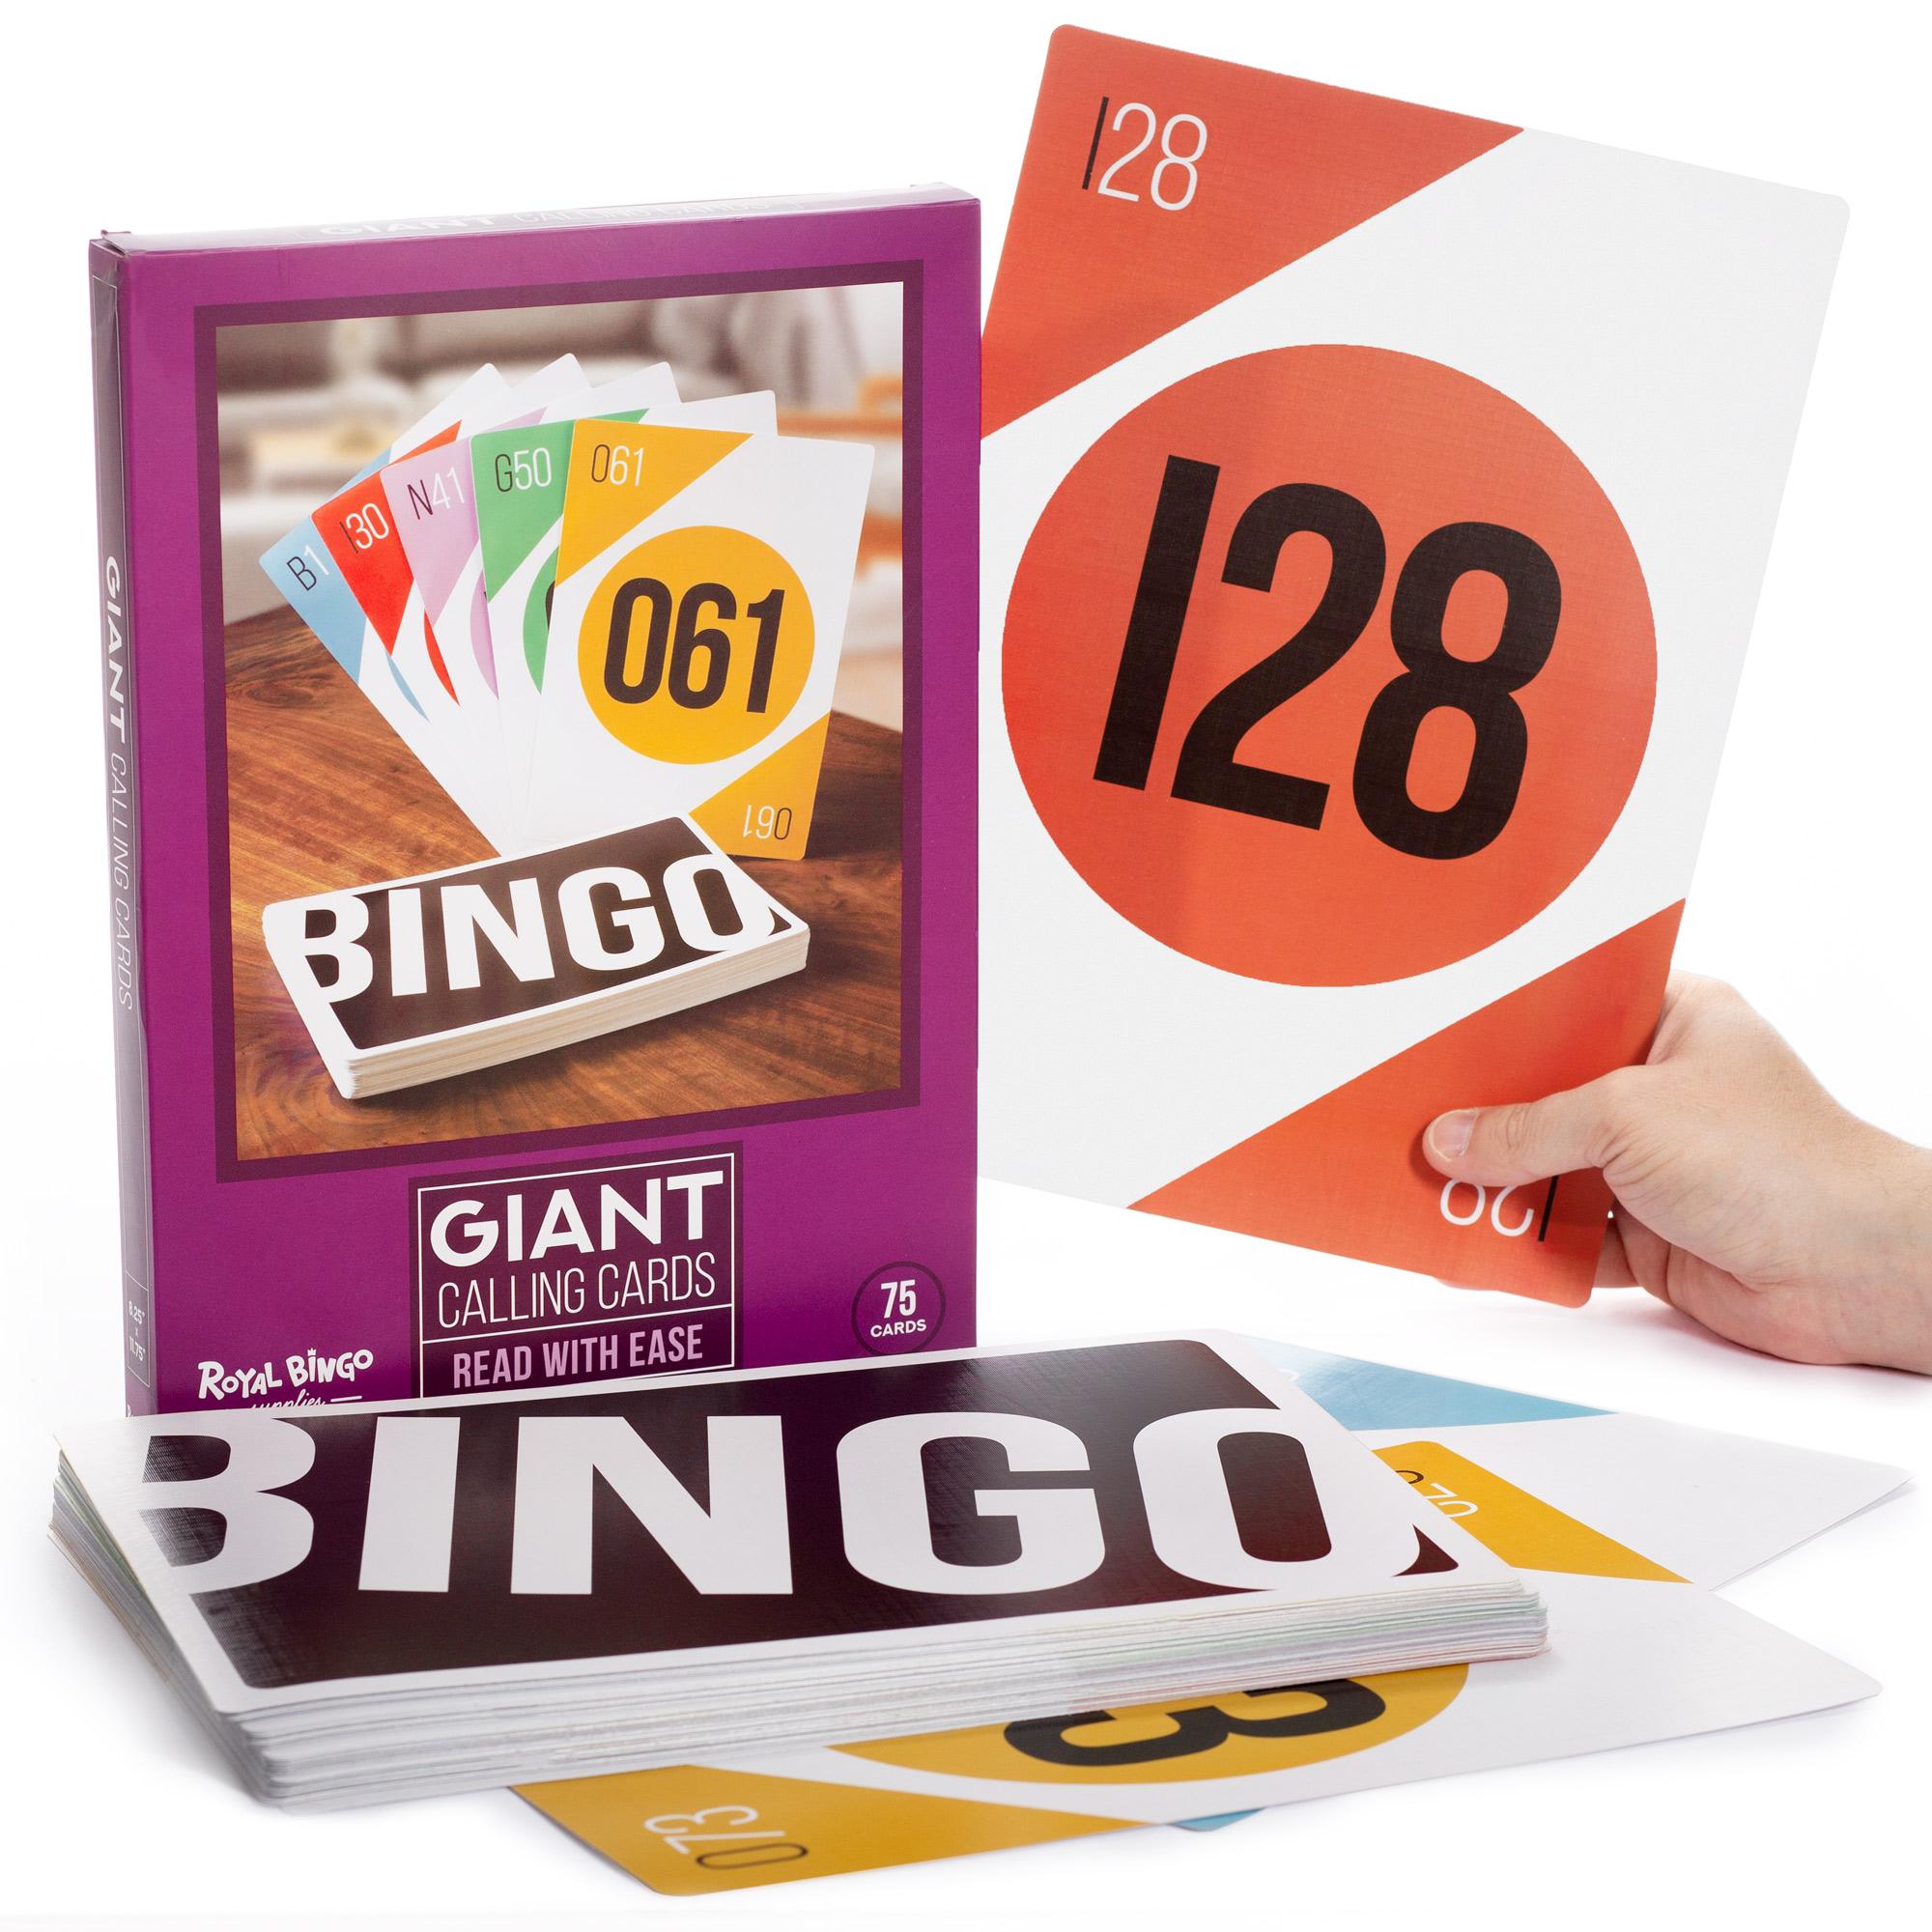 Giant Bingo Calling Cards